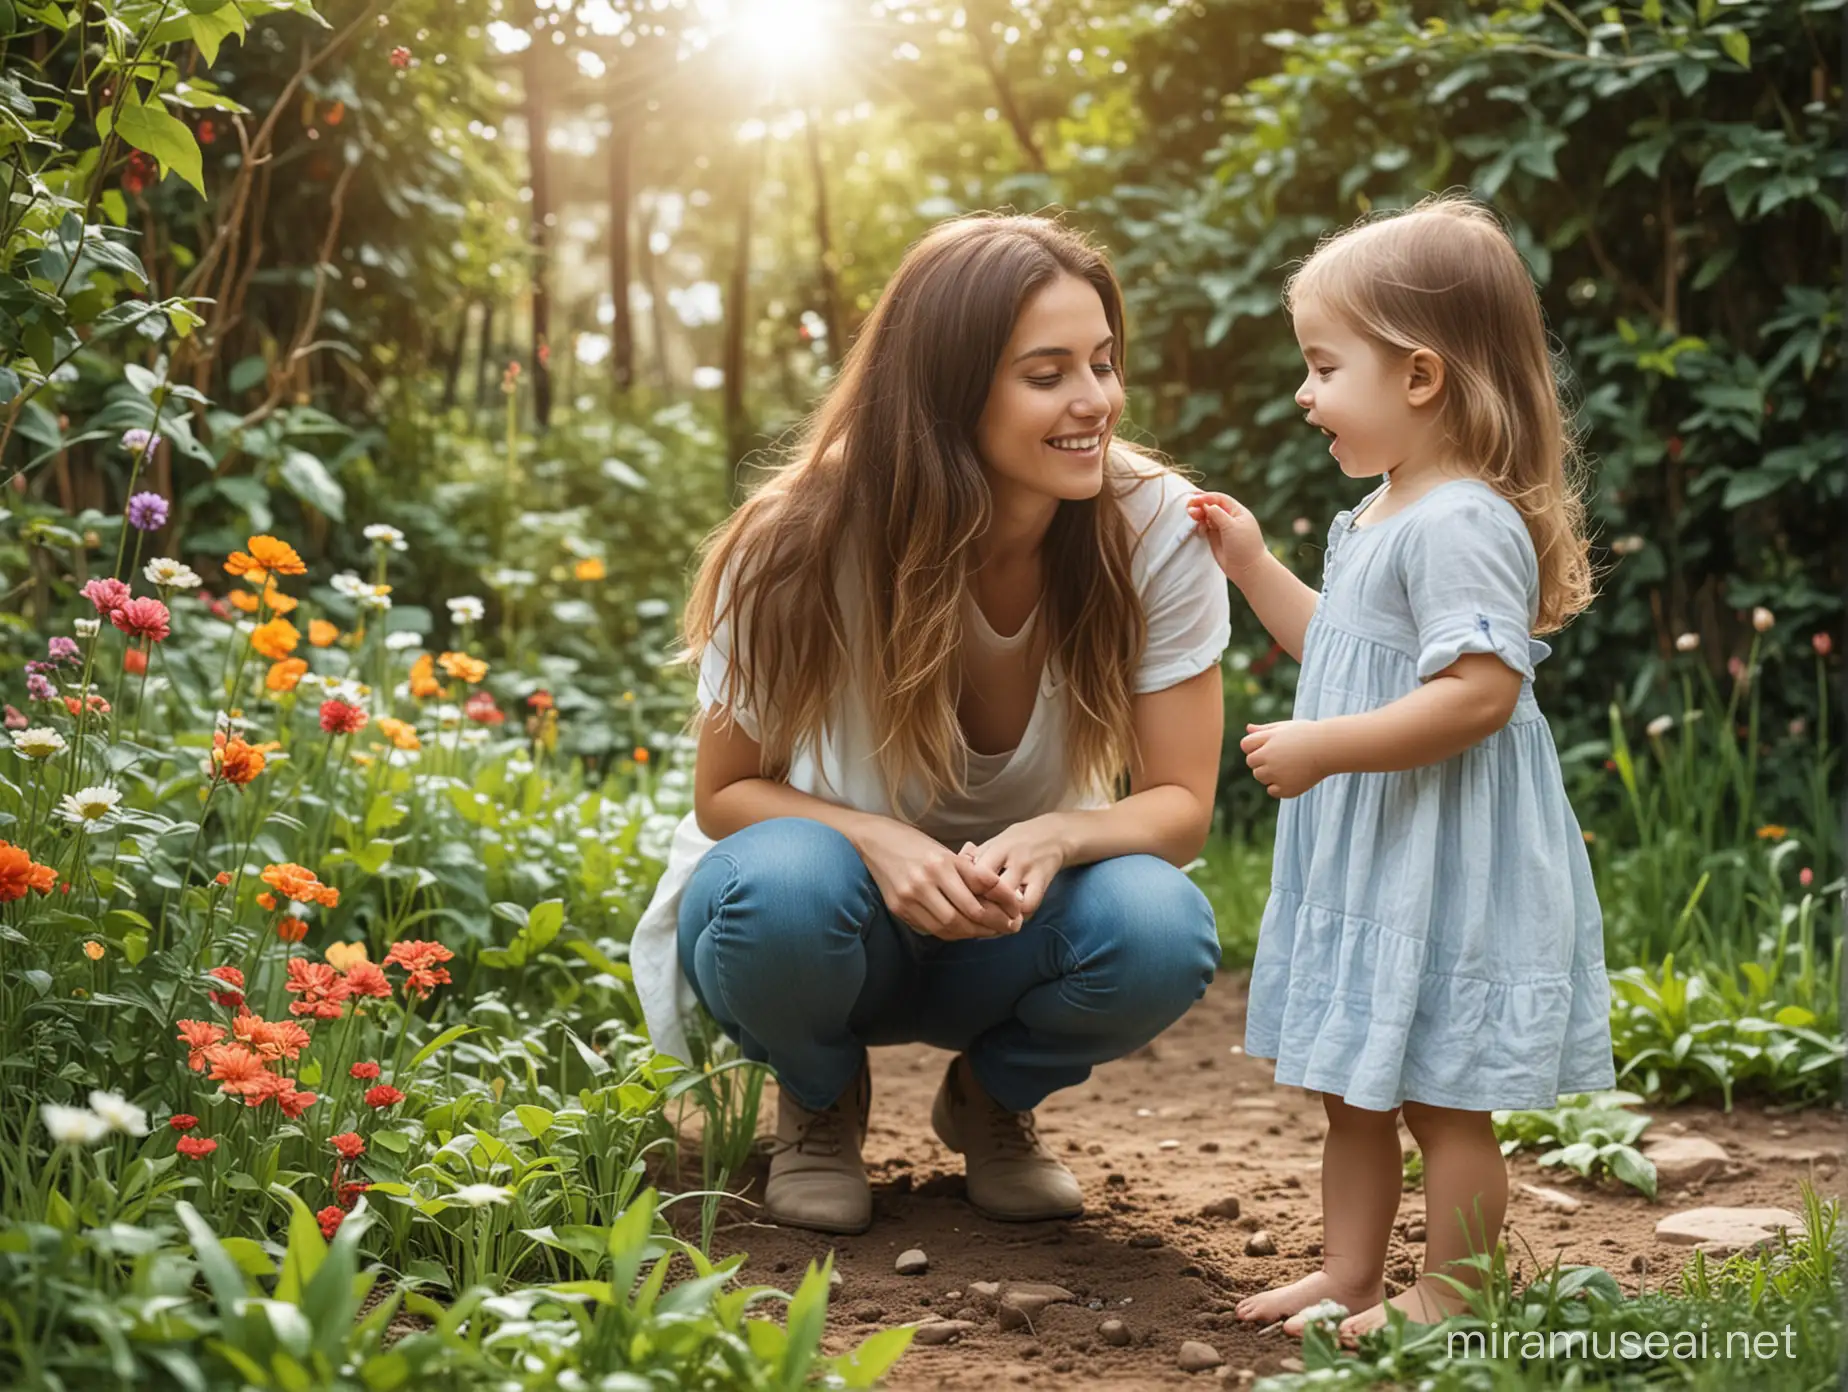 Woman Rediscovering Childhood Joy in Garden Play